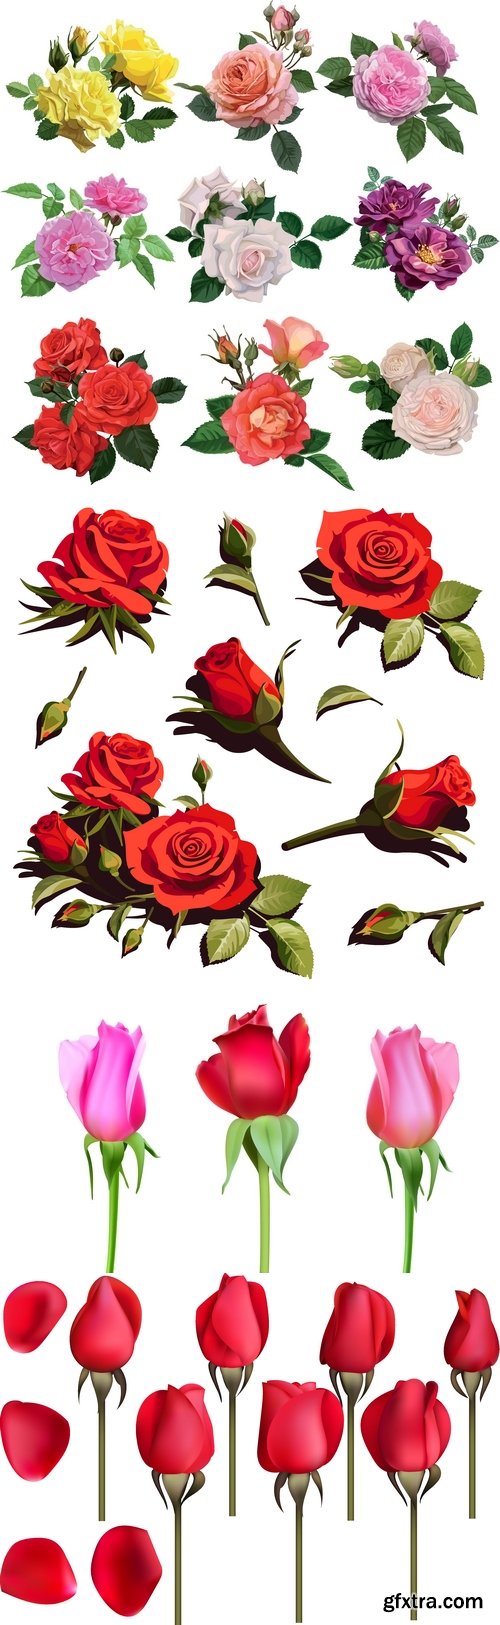 Vectors - Shiny Different Roses 11